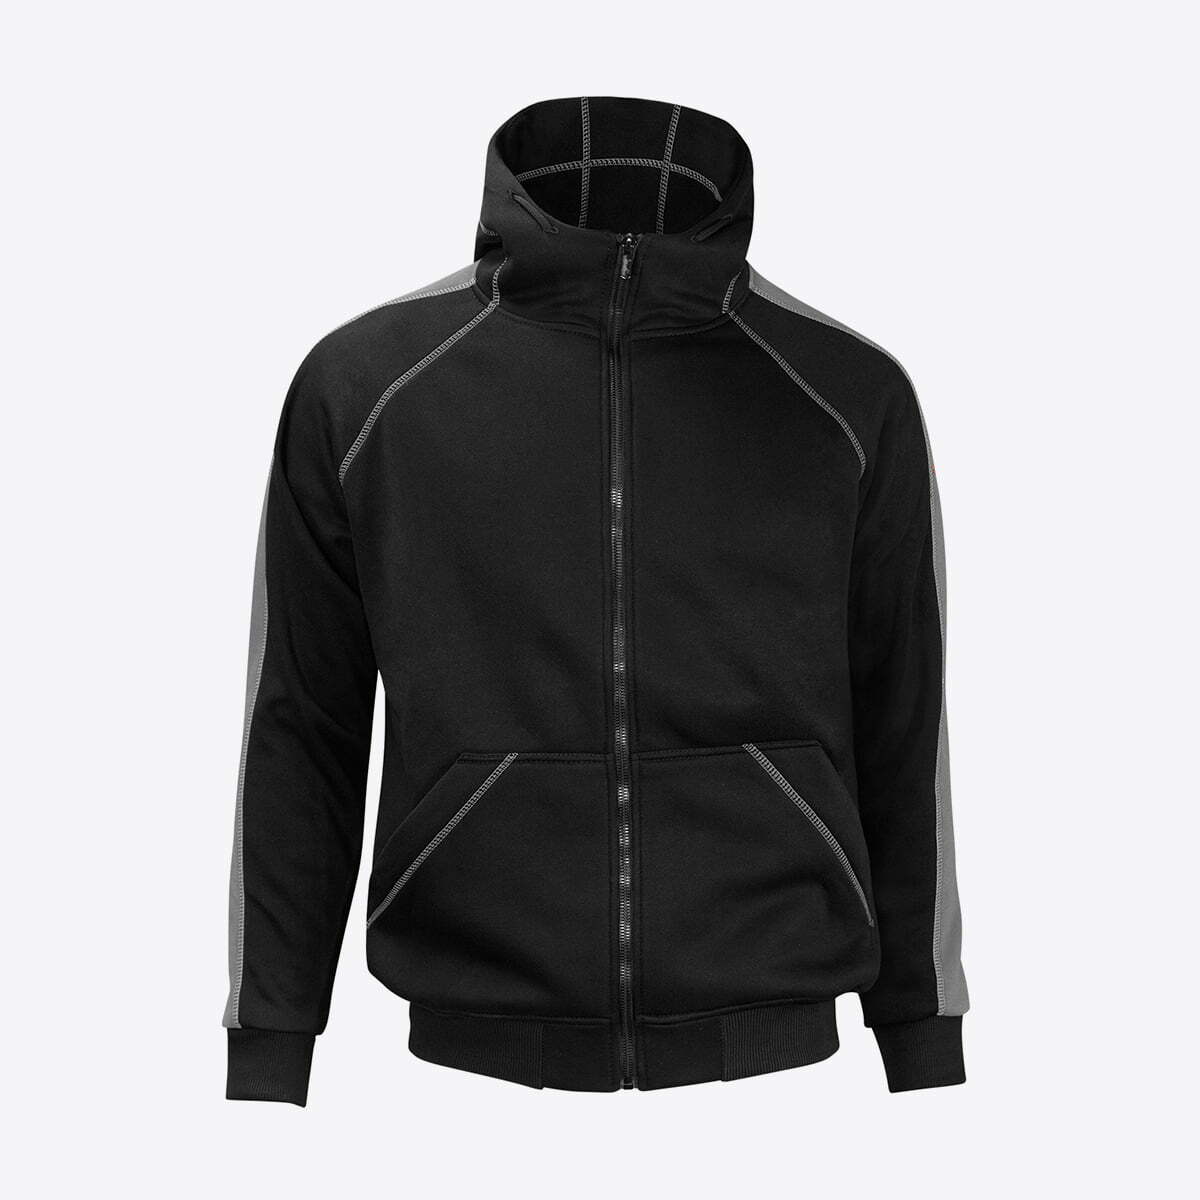 schwarz-grau-Sweatshirt-Herren-Hoodie-Kapuzenjacke-Pullover